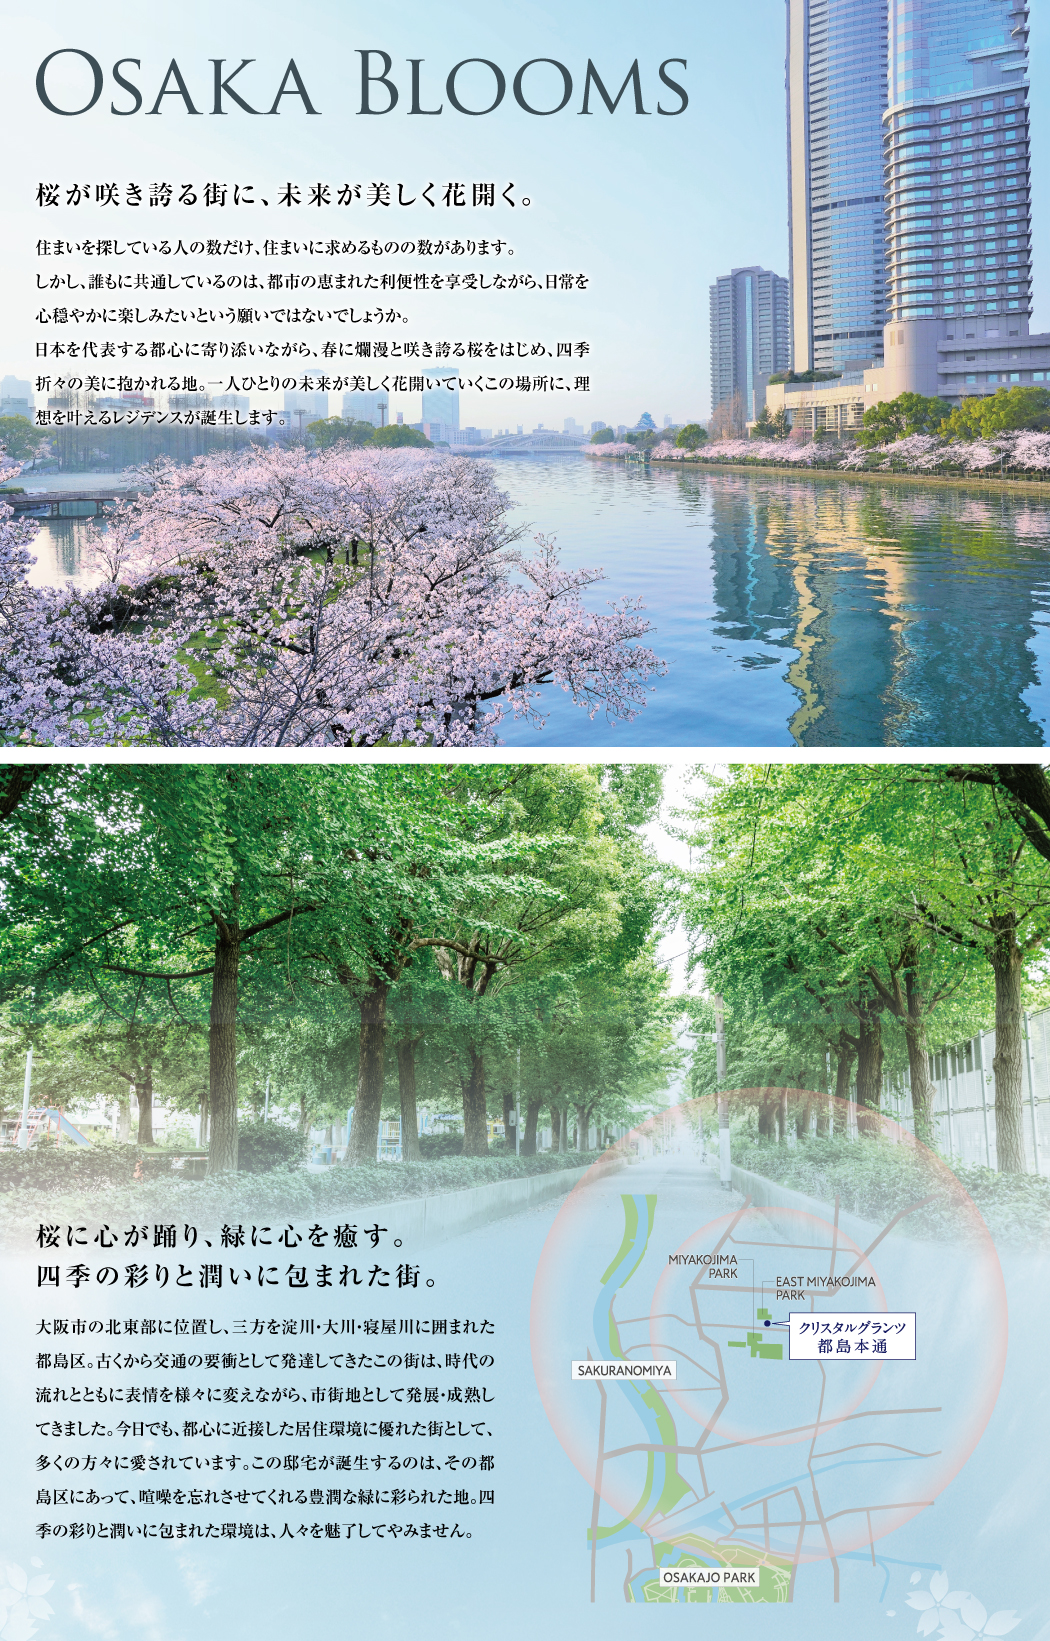 OSAKA BLOOMS,桜が咲き誇る街に、未来が美しく花開く。桜に心が踊り、緑に心を癒す。四季の彩りと潤いに包まれた街。